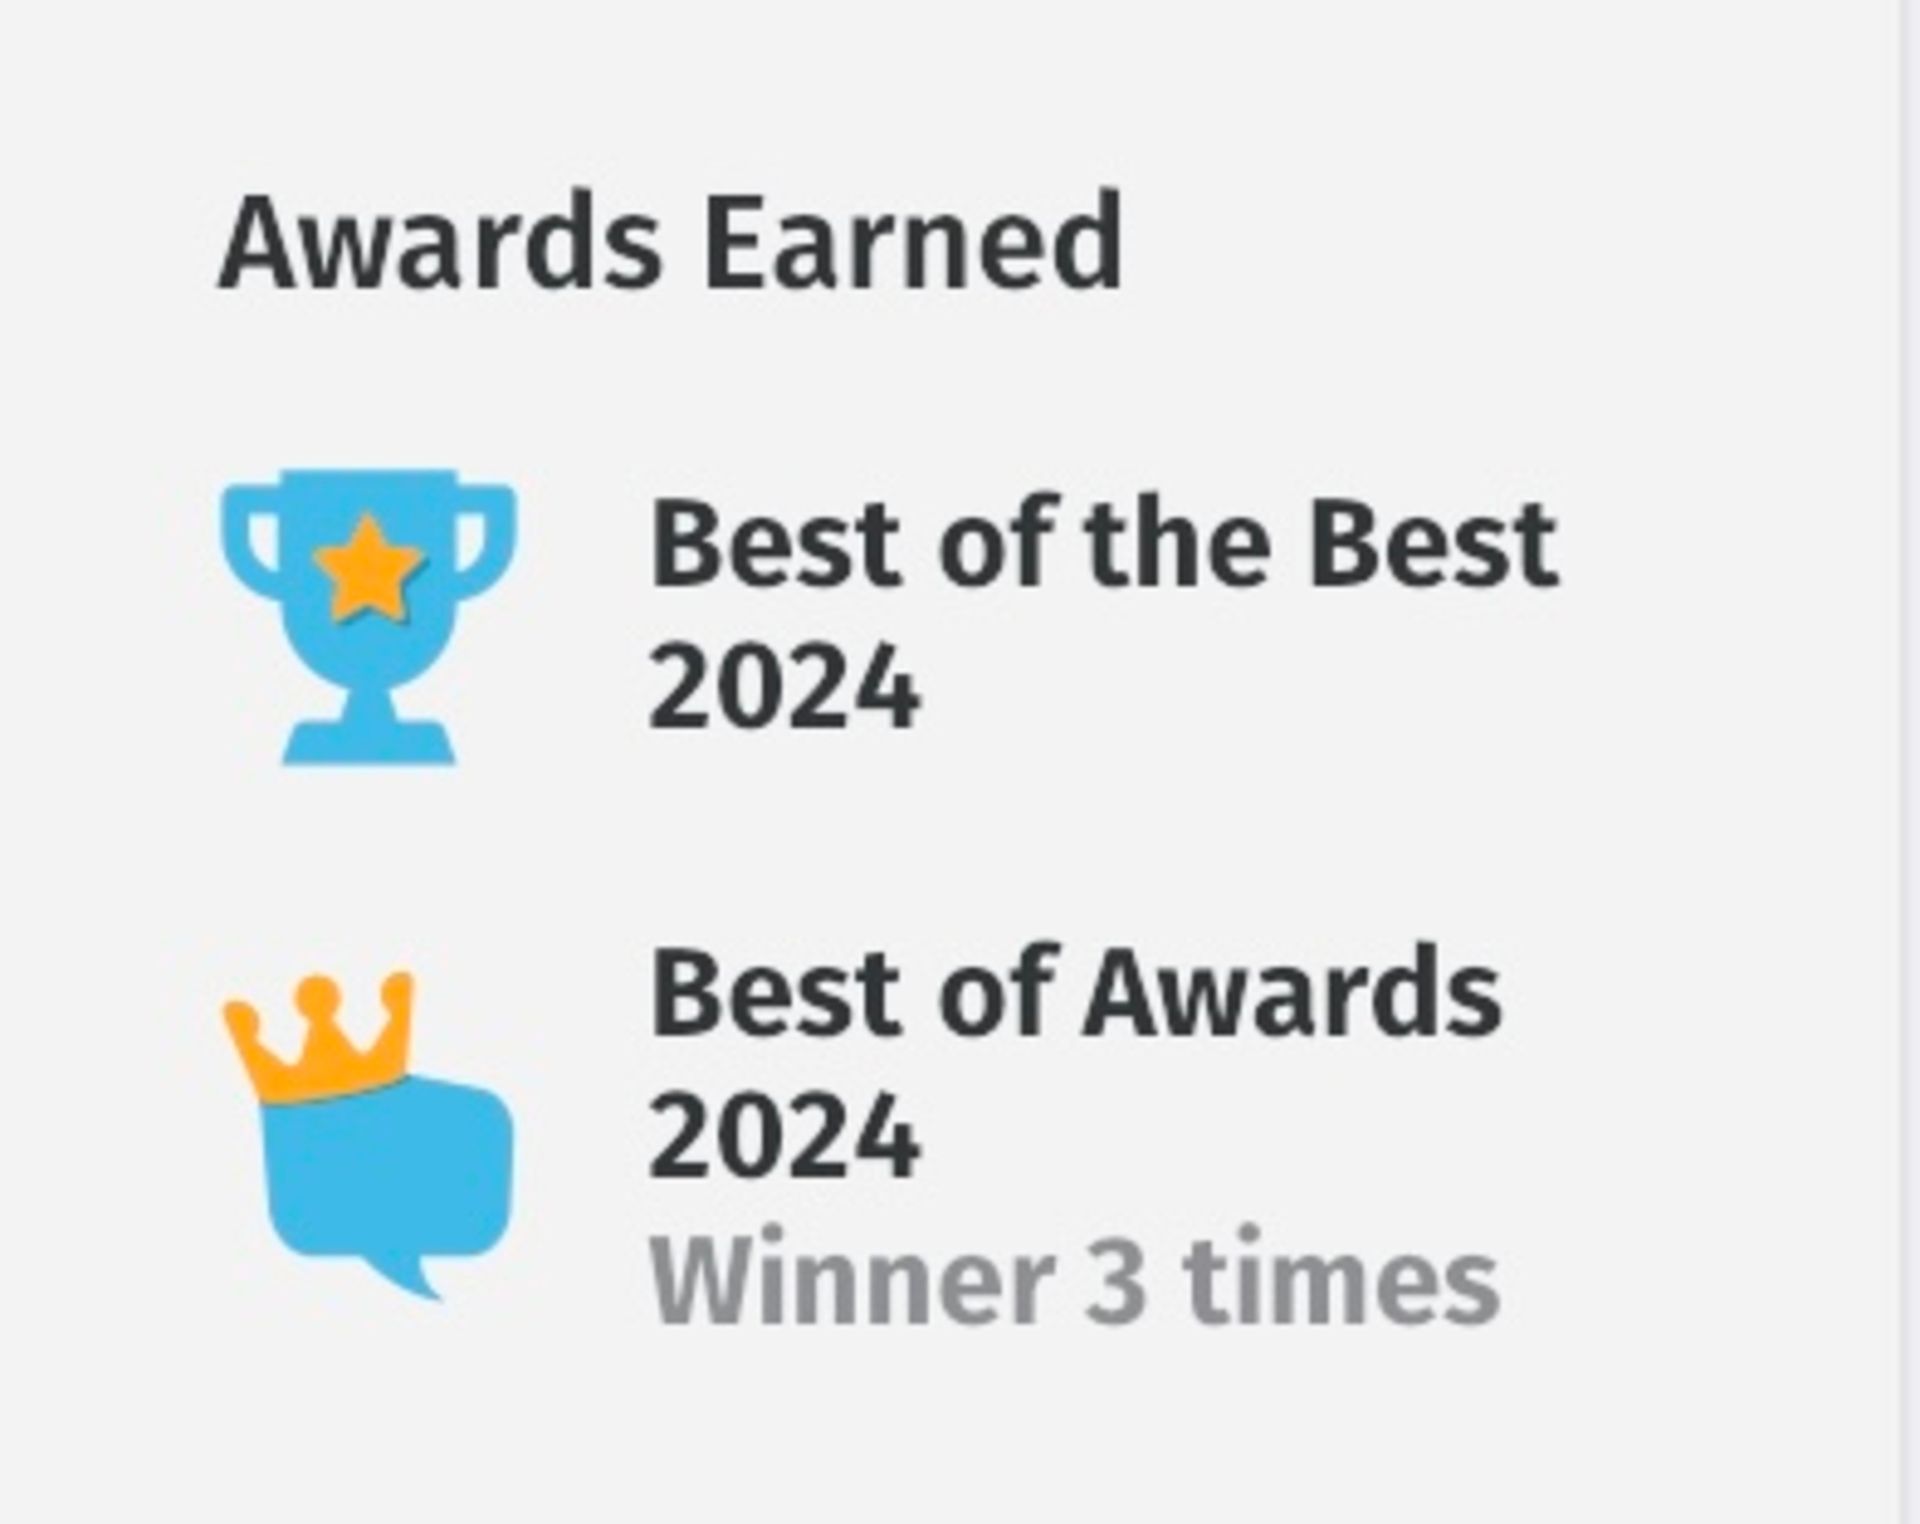 Awards earned best of the best 2024 best of awards 2024 winner 3 times